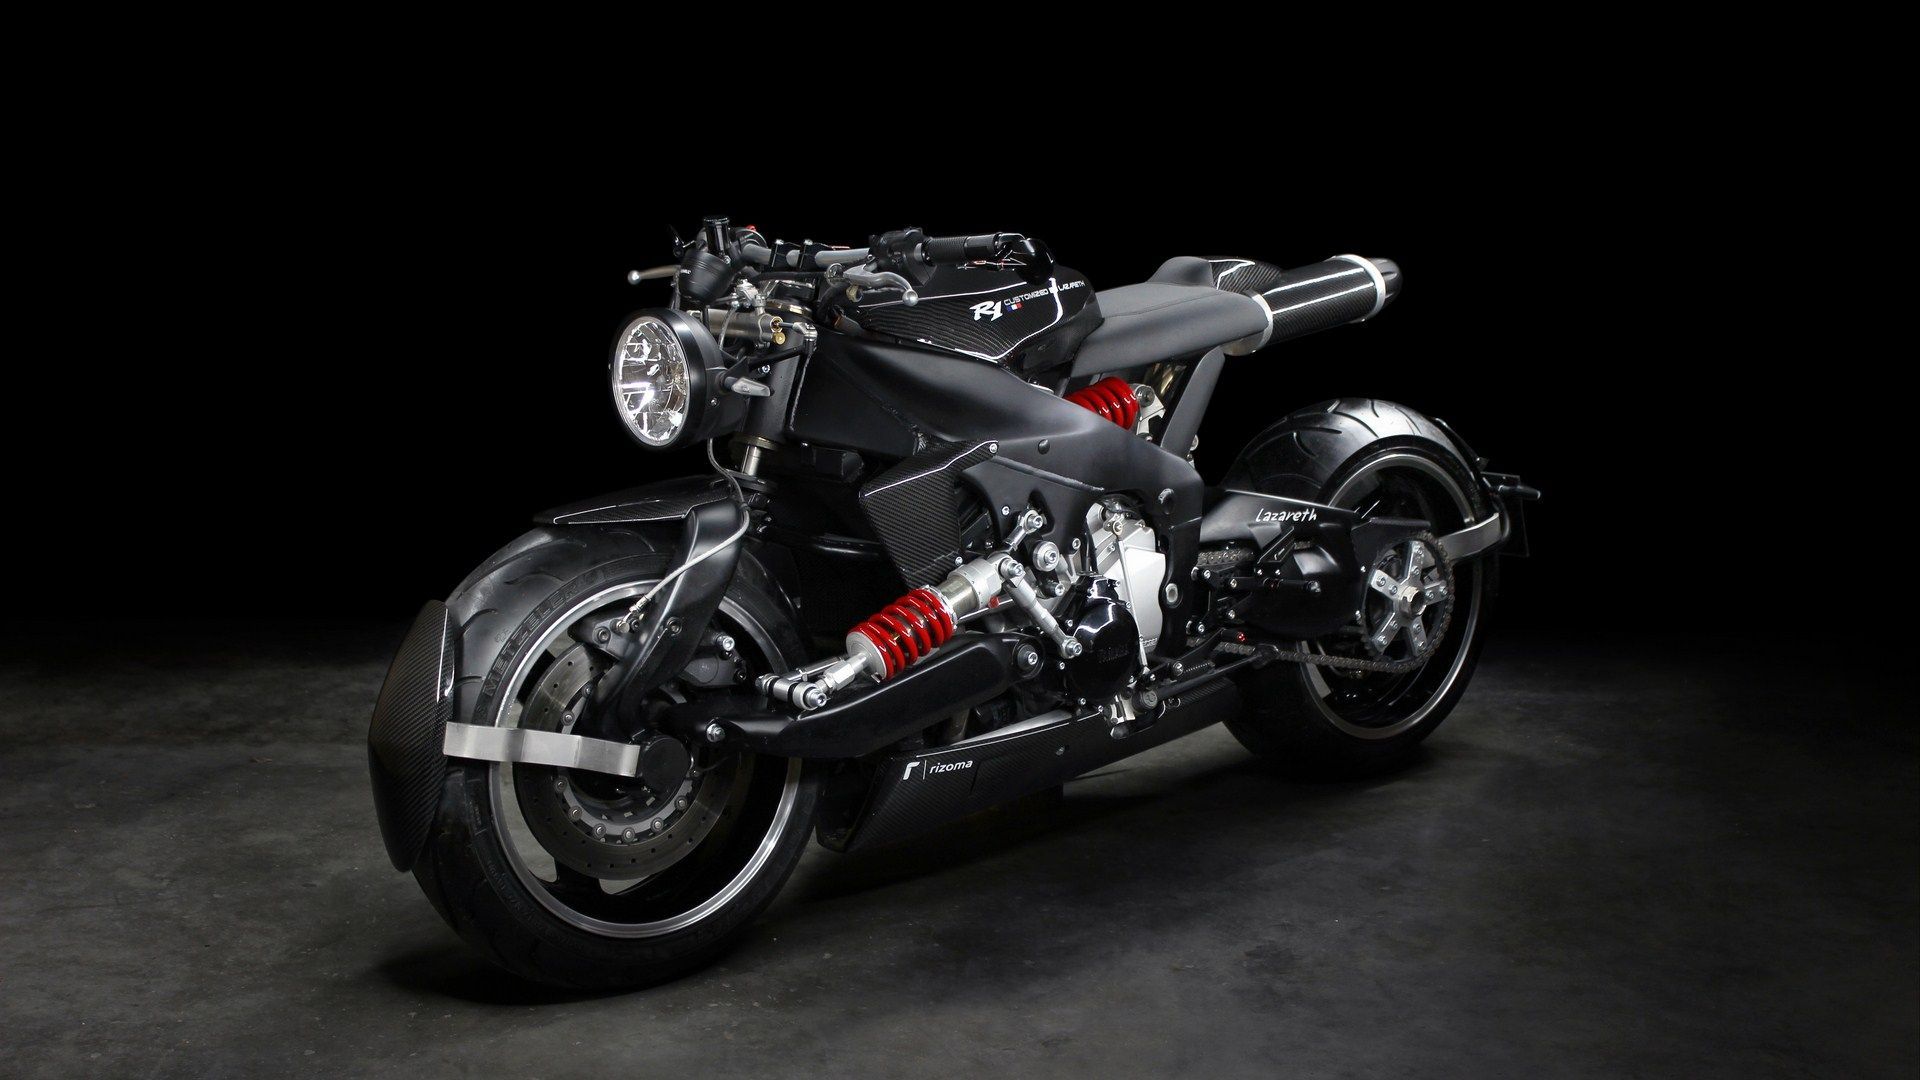 Lazareth's unique take on Yamaha's YZF-R1 Superbike